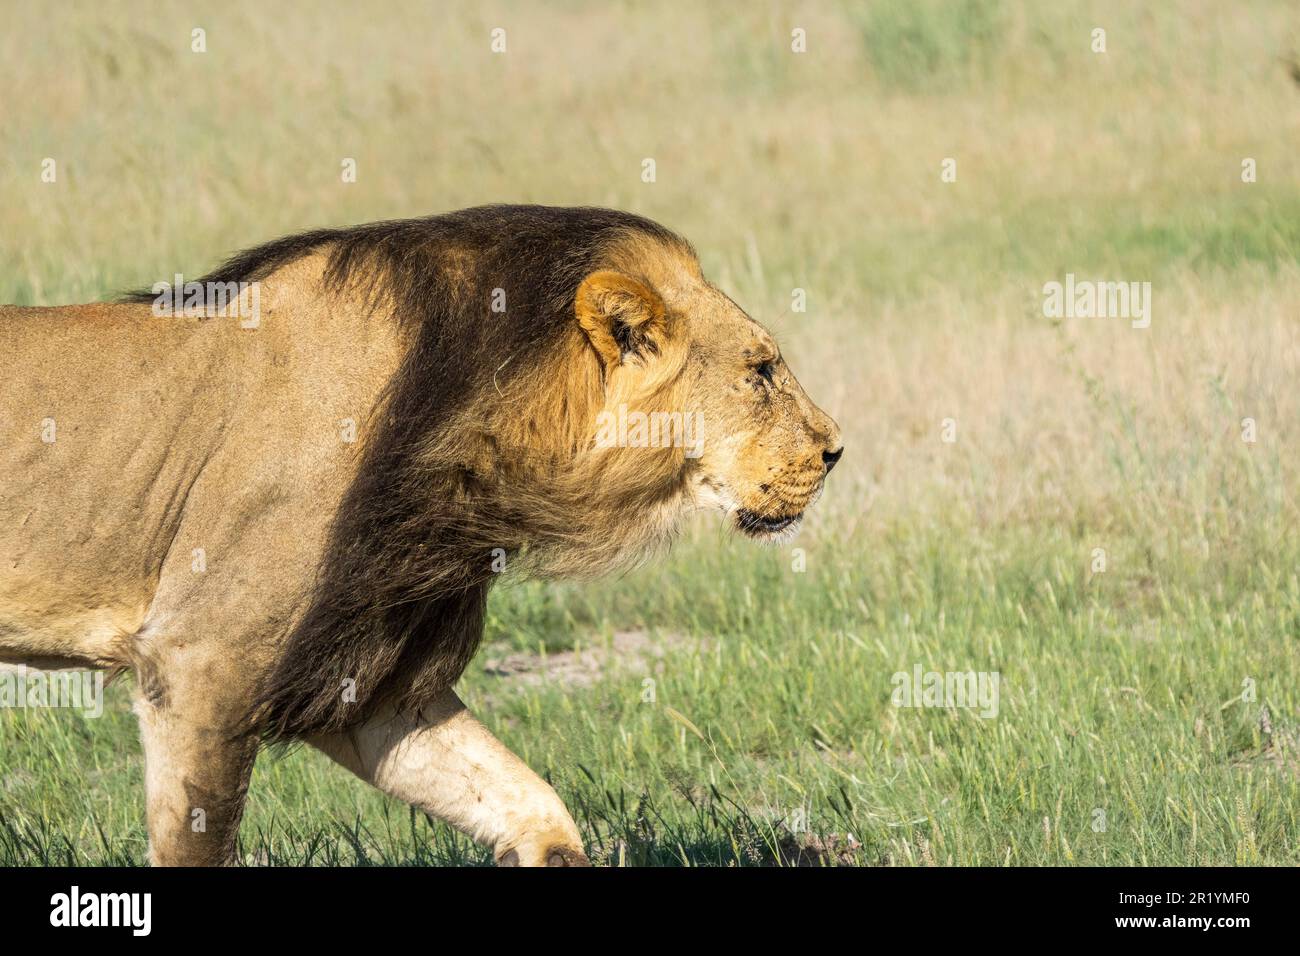 Lion in grass, black-maned lion, wind blows mane. Portrait. Kalahari, Kgalagadi Transfrontier Park, South Africa Stock Photo